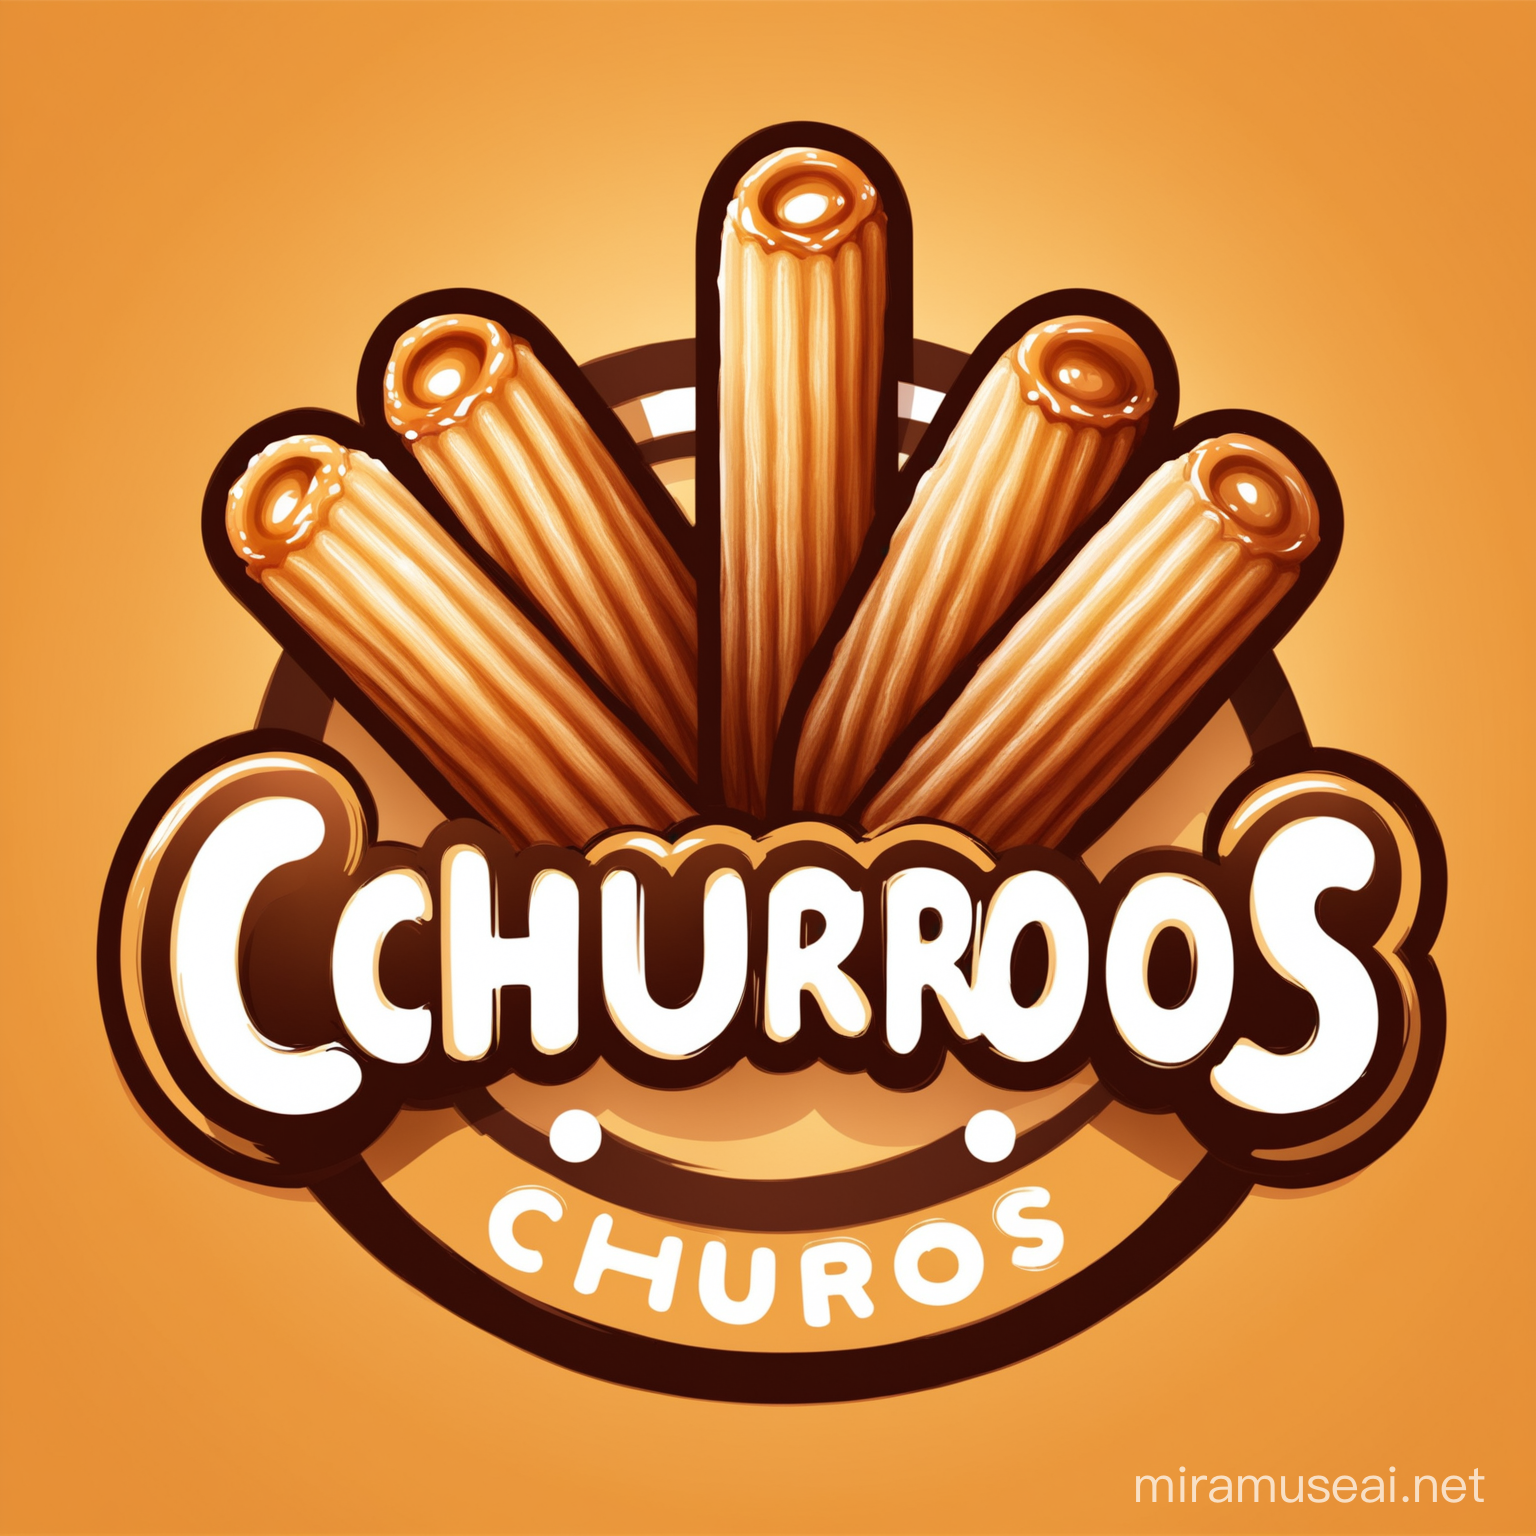 Delicious Churros Logo Design for Tempting Business Branding